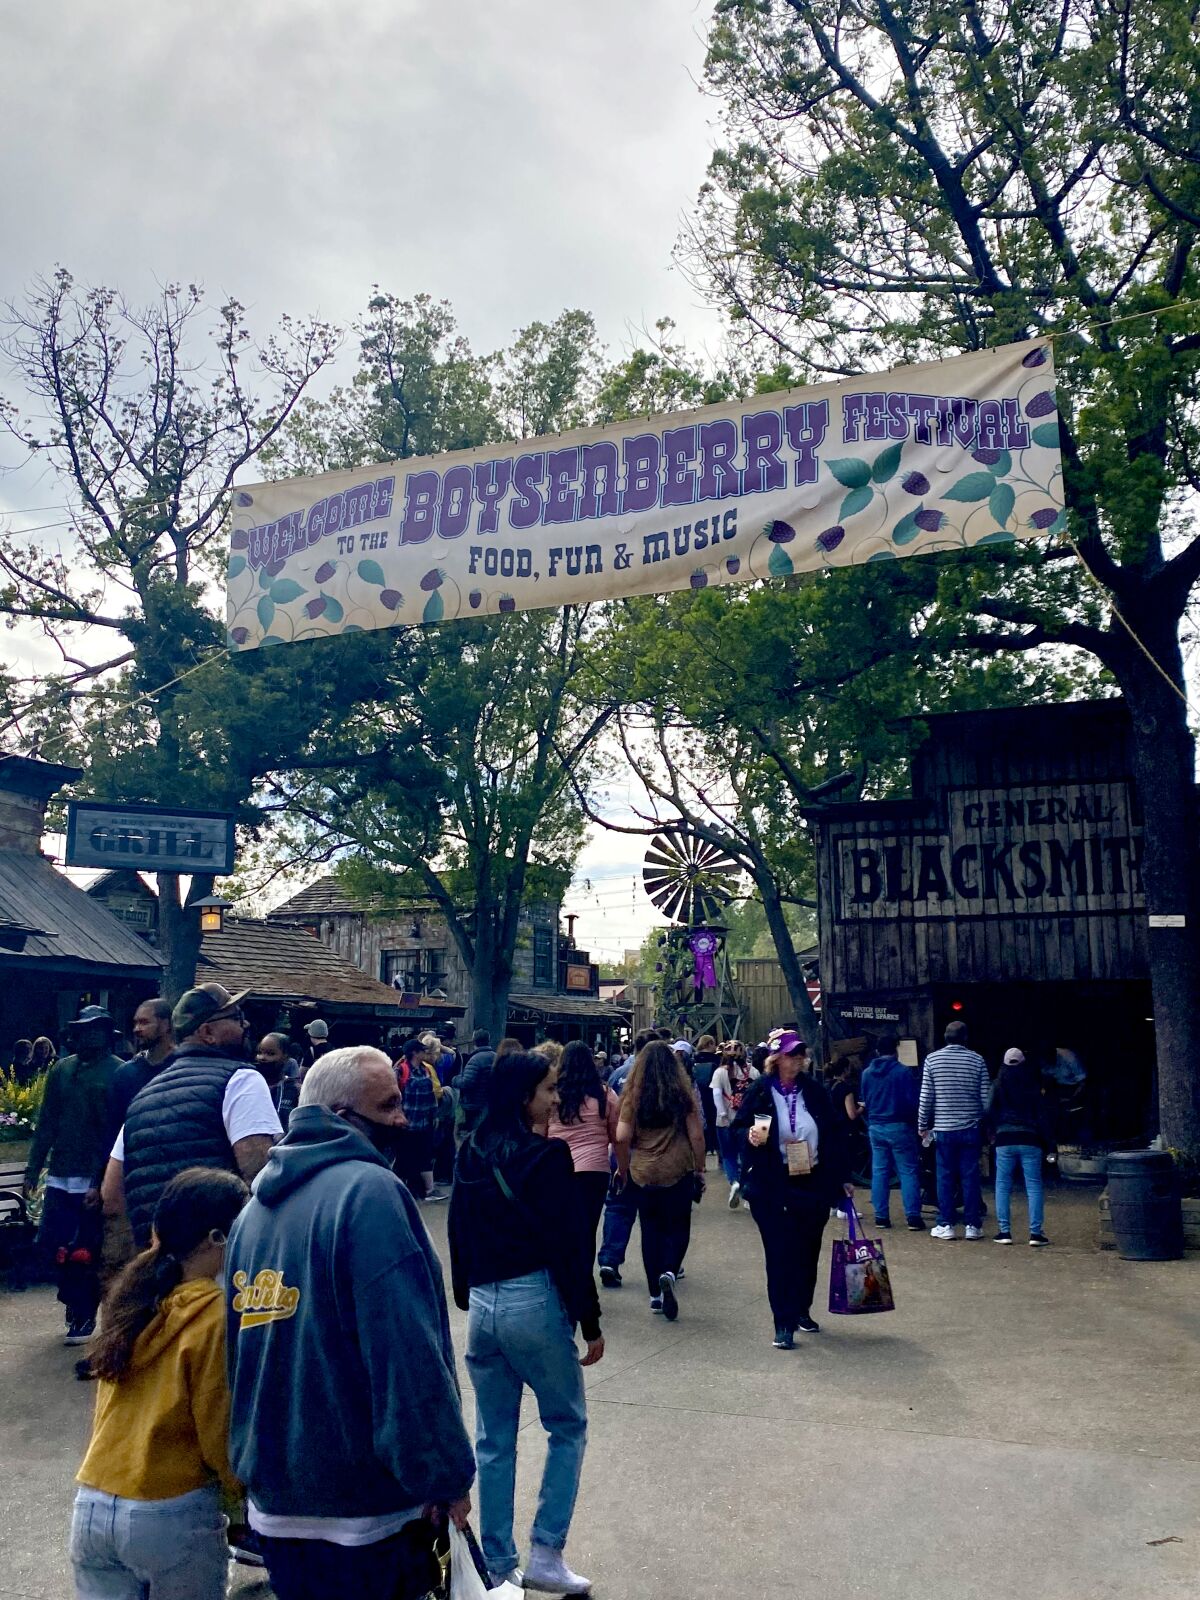 The Knott's Berry Farm Boysenberry Festival runs through April 26.